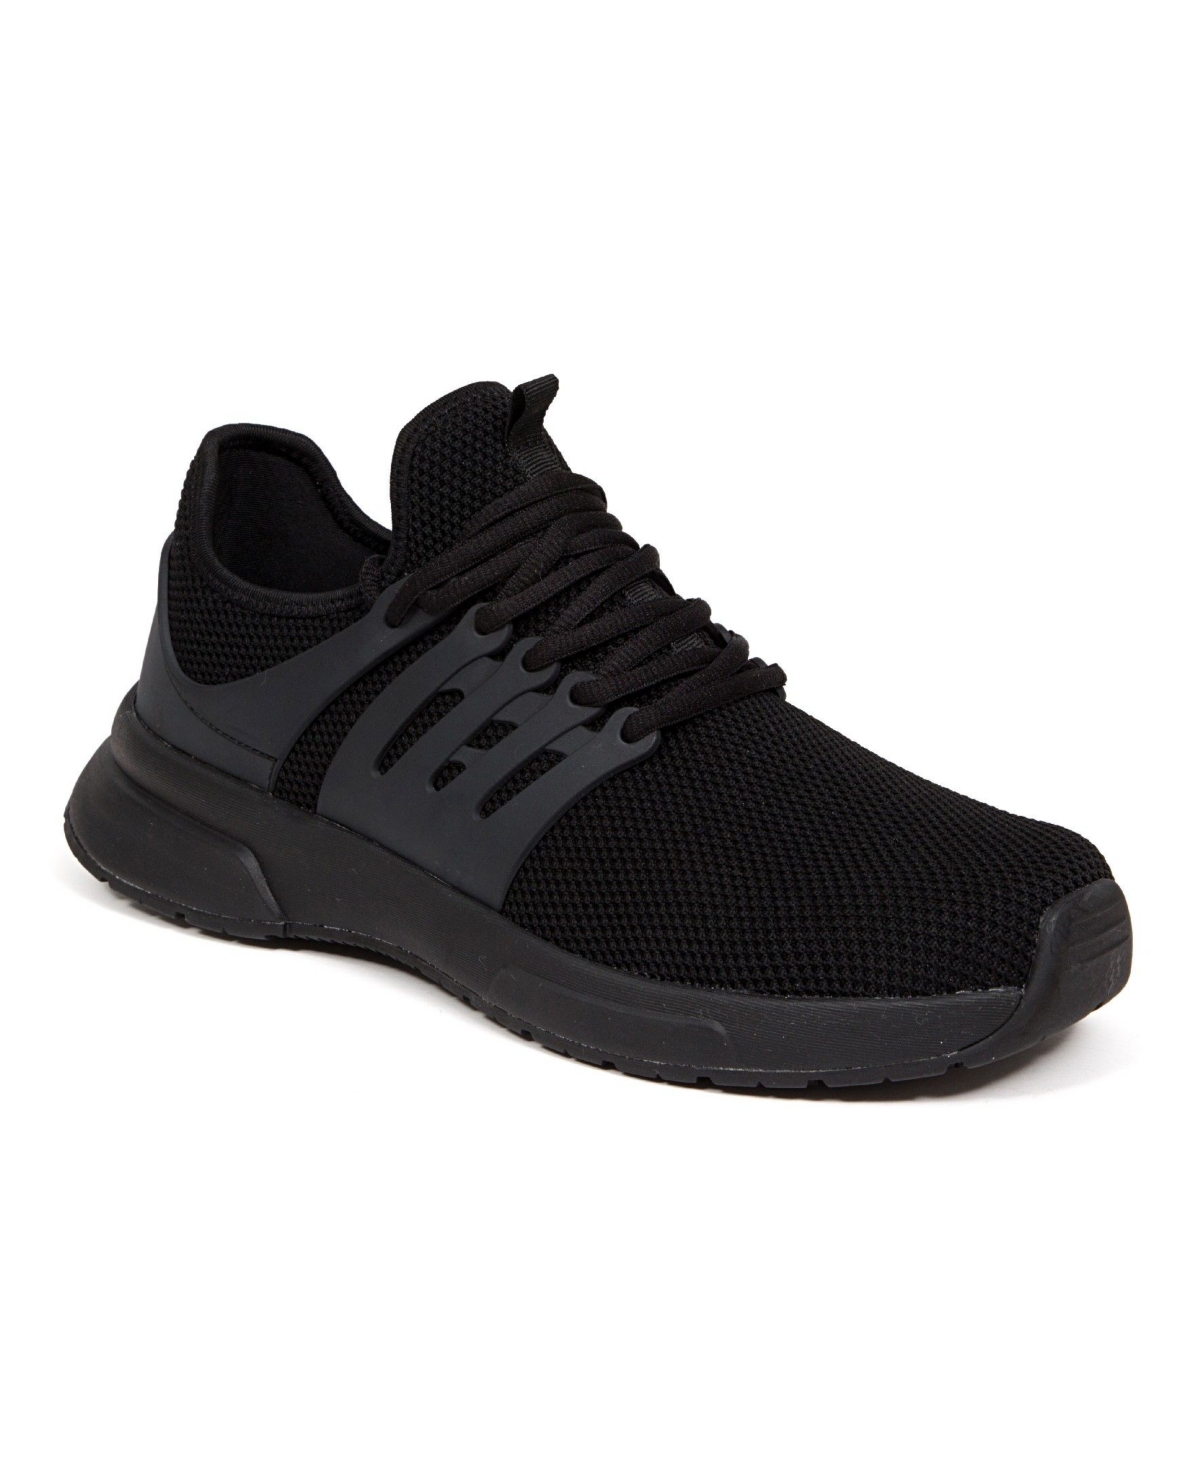 Men's Cortez Memory Foam Non-Marking Water Repellant Dress Comfort Sneakers - Black